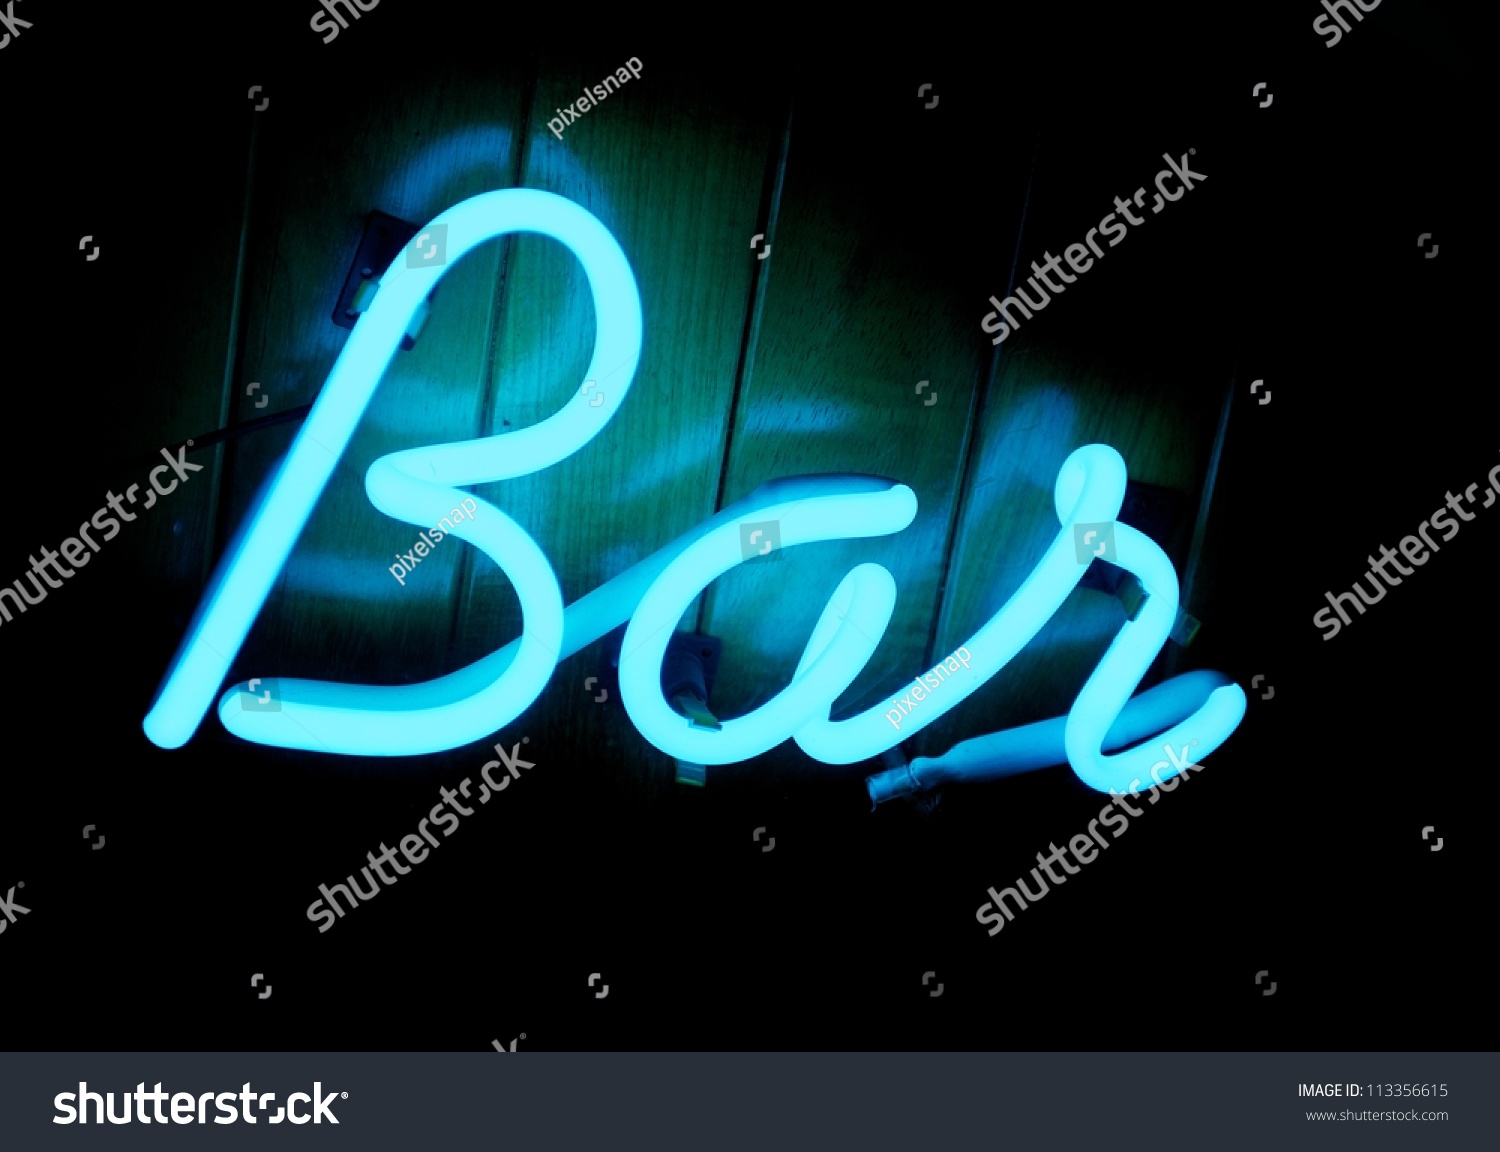 A Cool Blue Lit Neon Bar Sign On A Teak Wood Paneled Wall